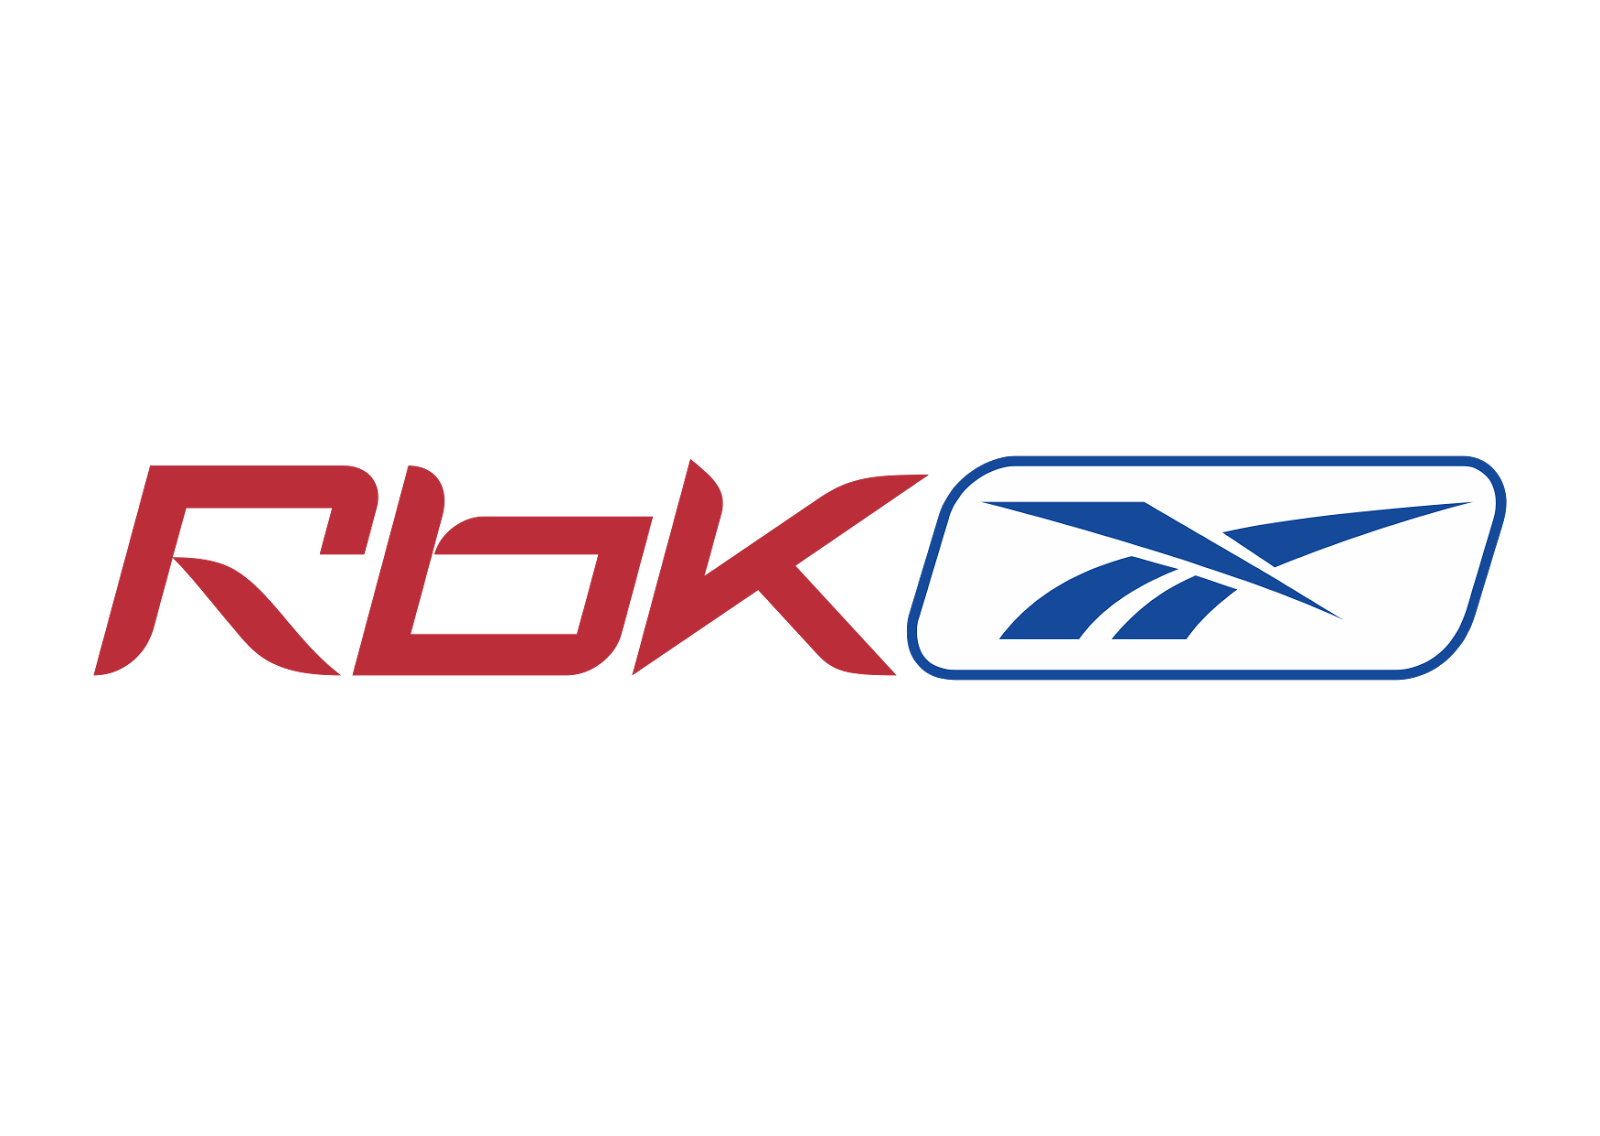 reebok logo picture #7038